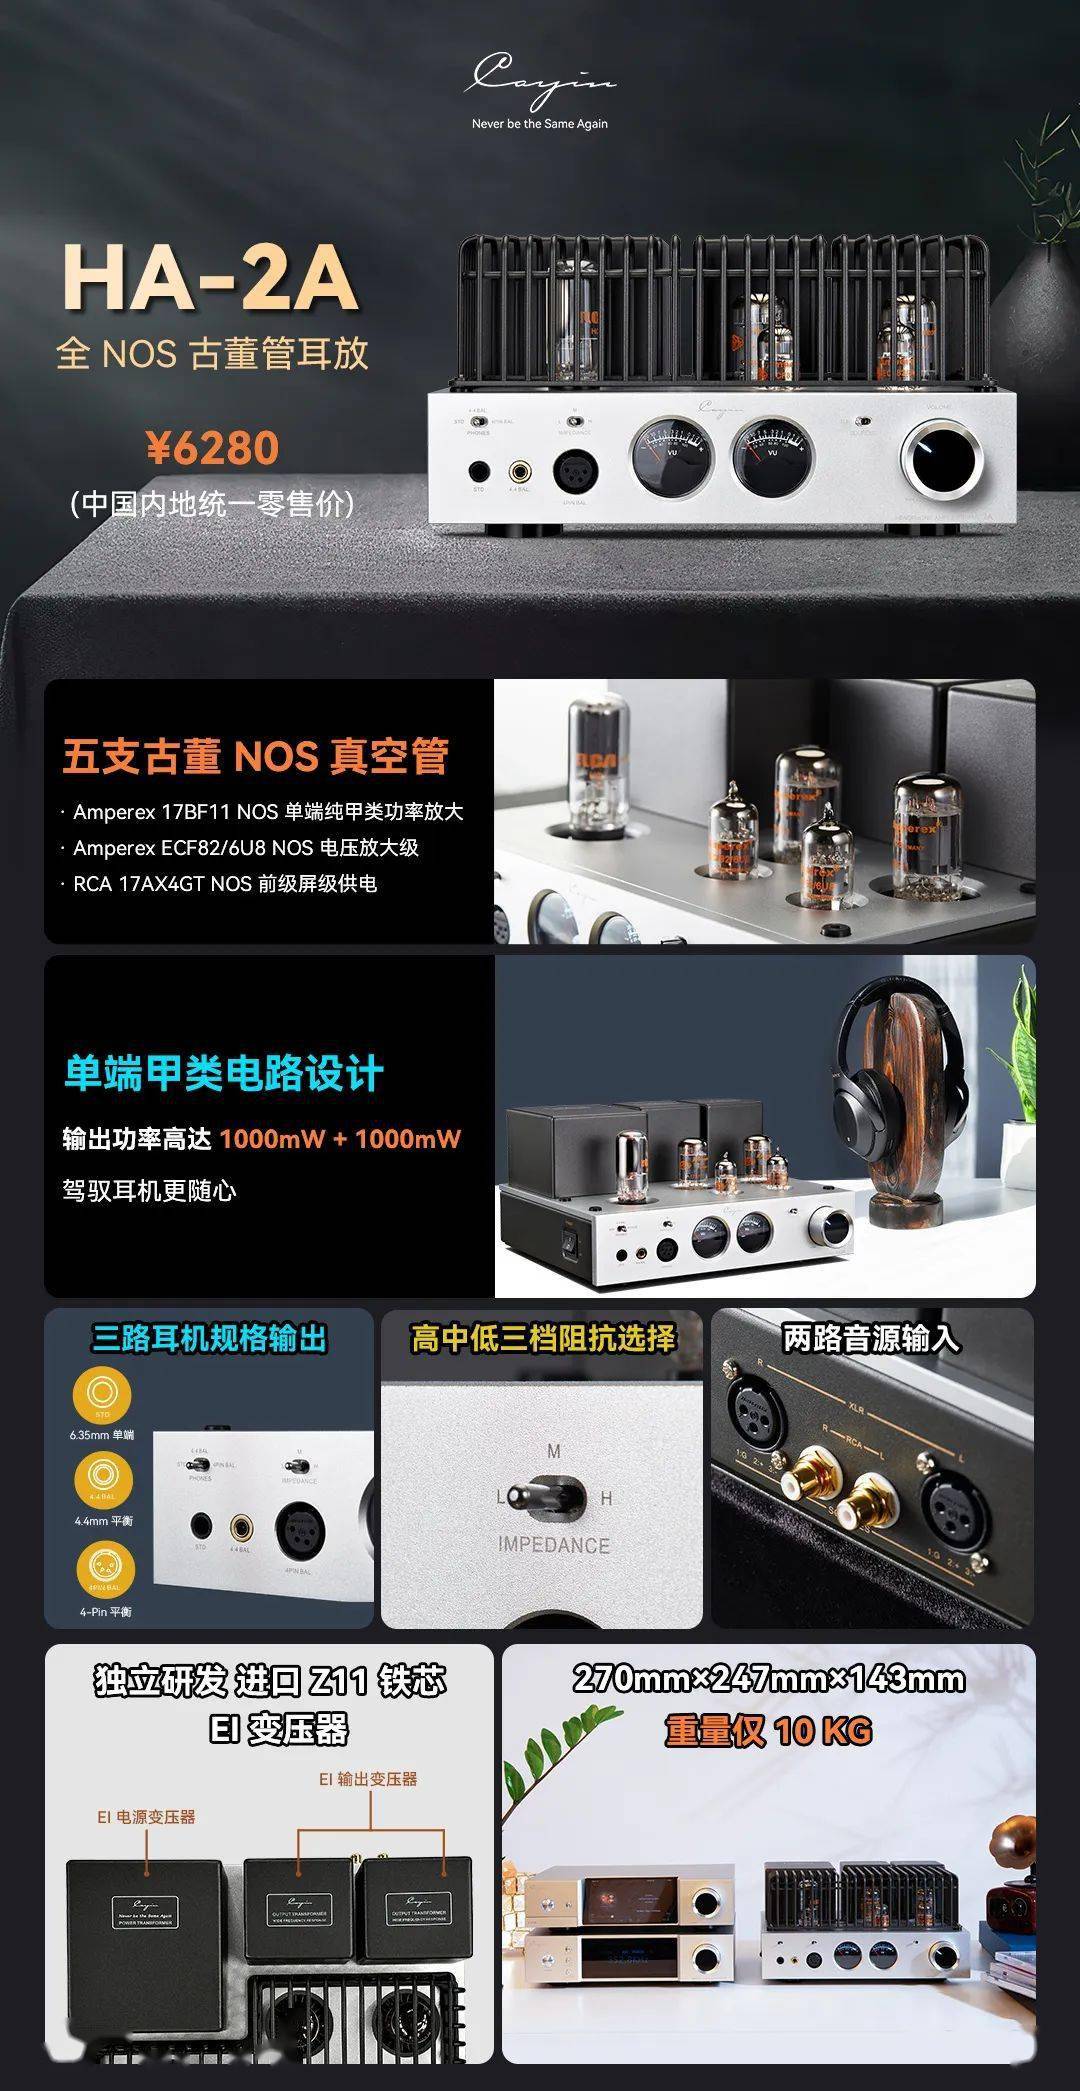 Cayin 推出全 NOS 电子管耳放 HA-2A，定价6280元